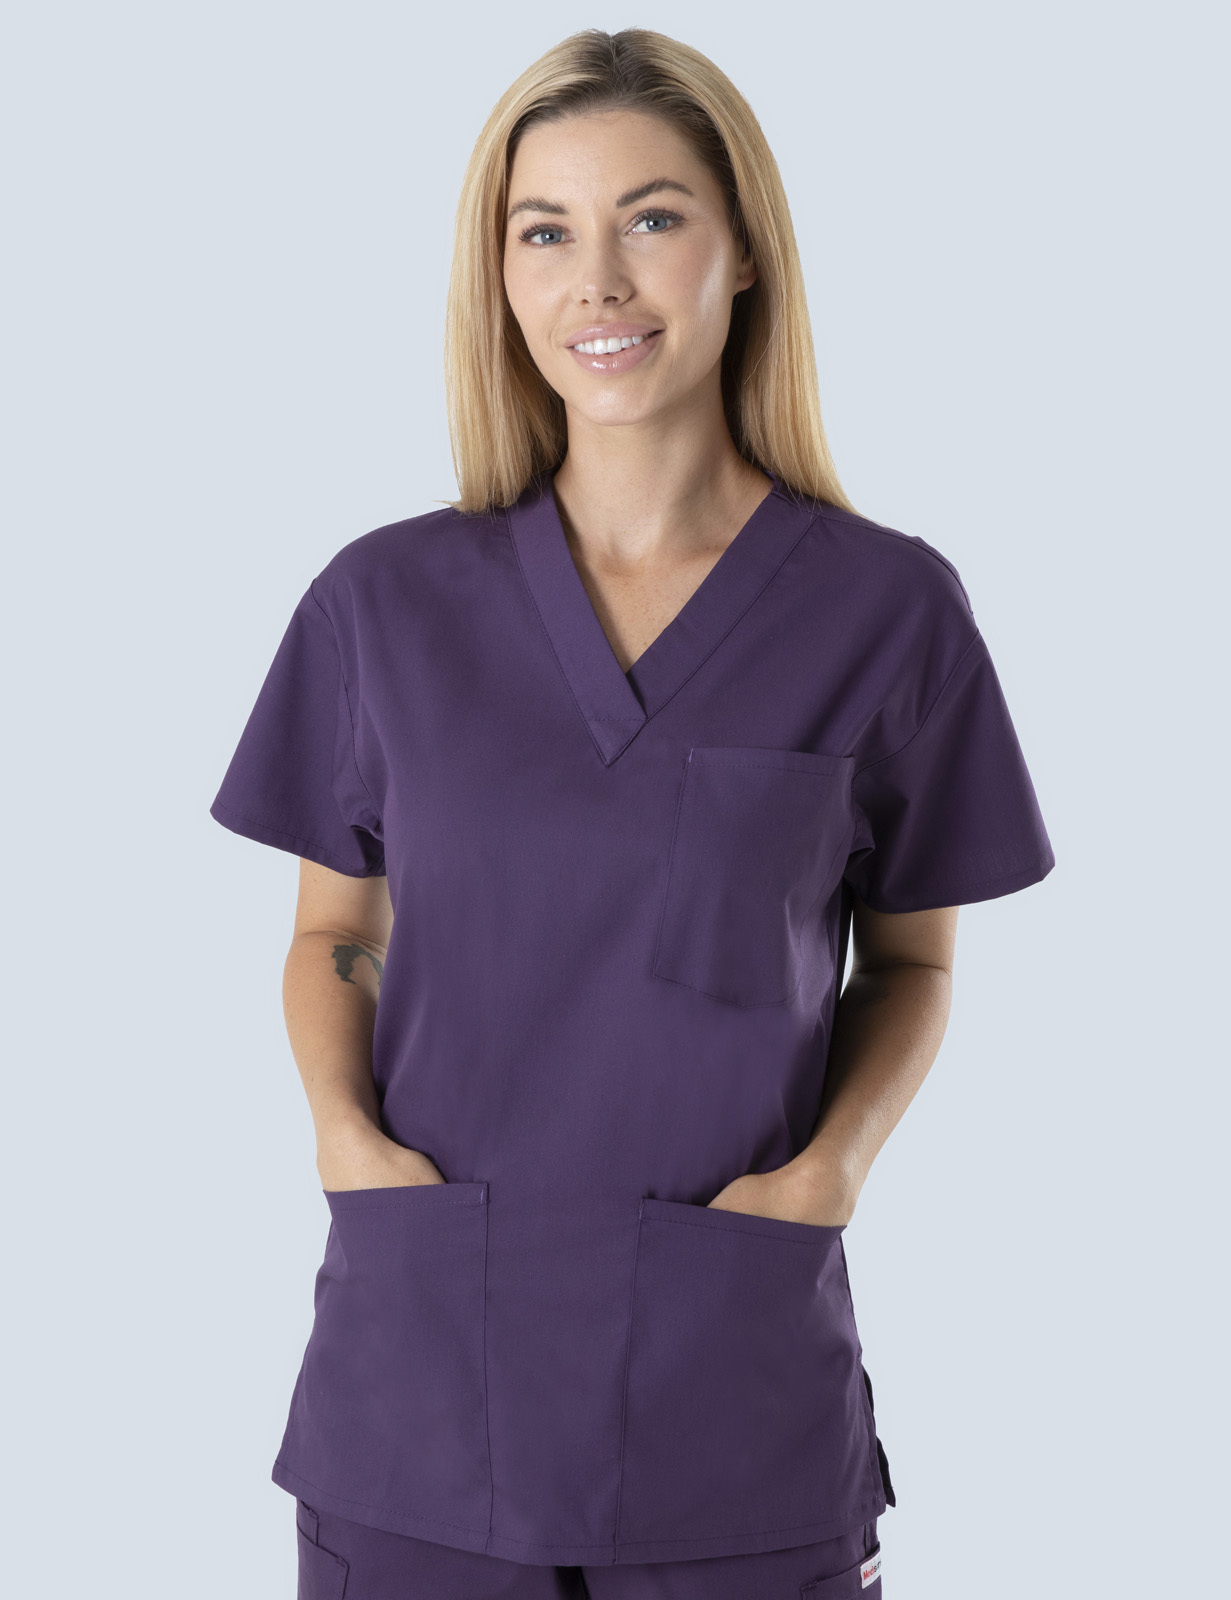 Tweed Hospital Pharmacy - PHARMACIST - Aubergine Women's 4 Pocket Scrub Top